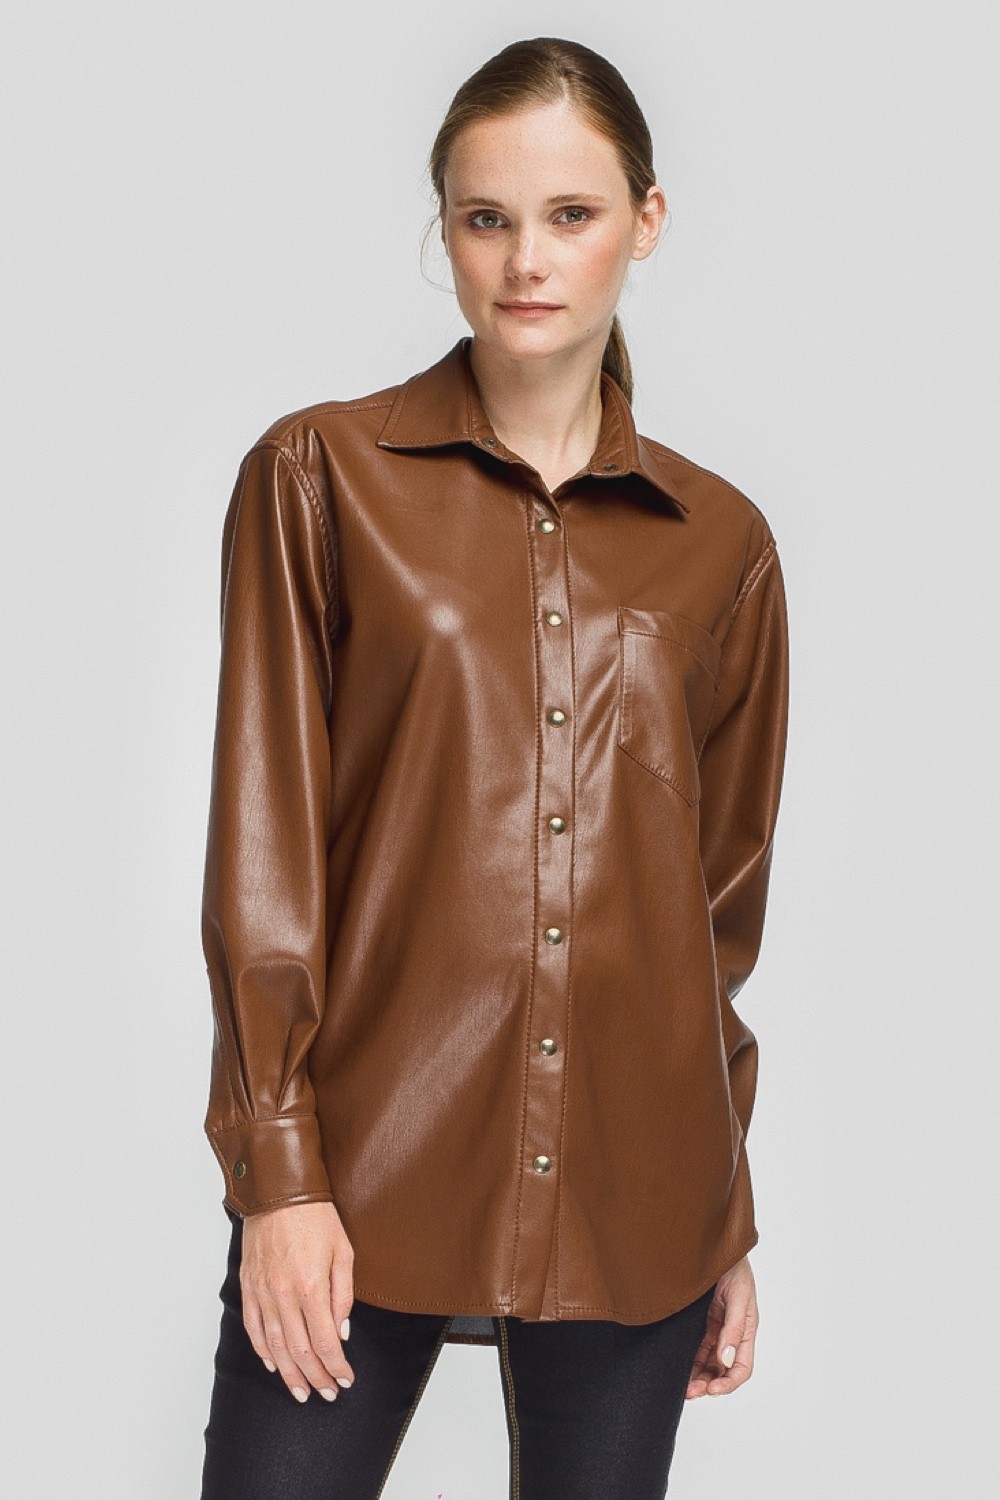 Caramel eco-leather maternity-friendly shirt